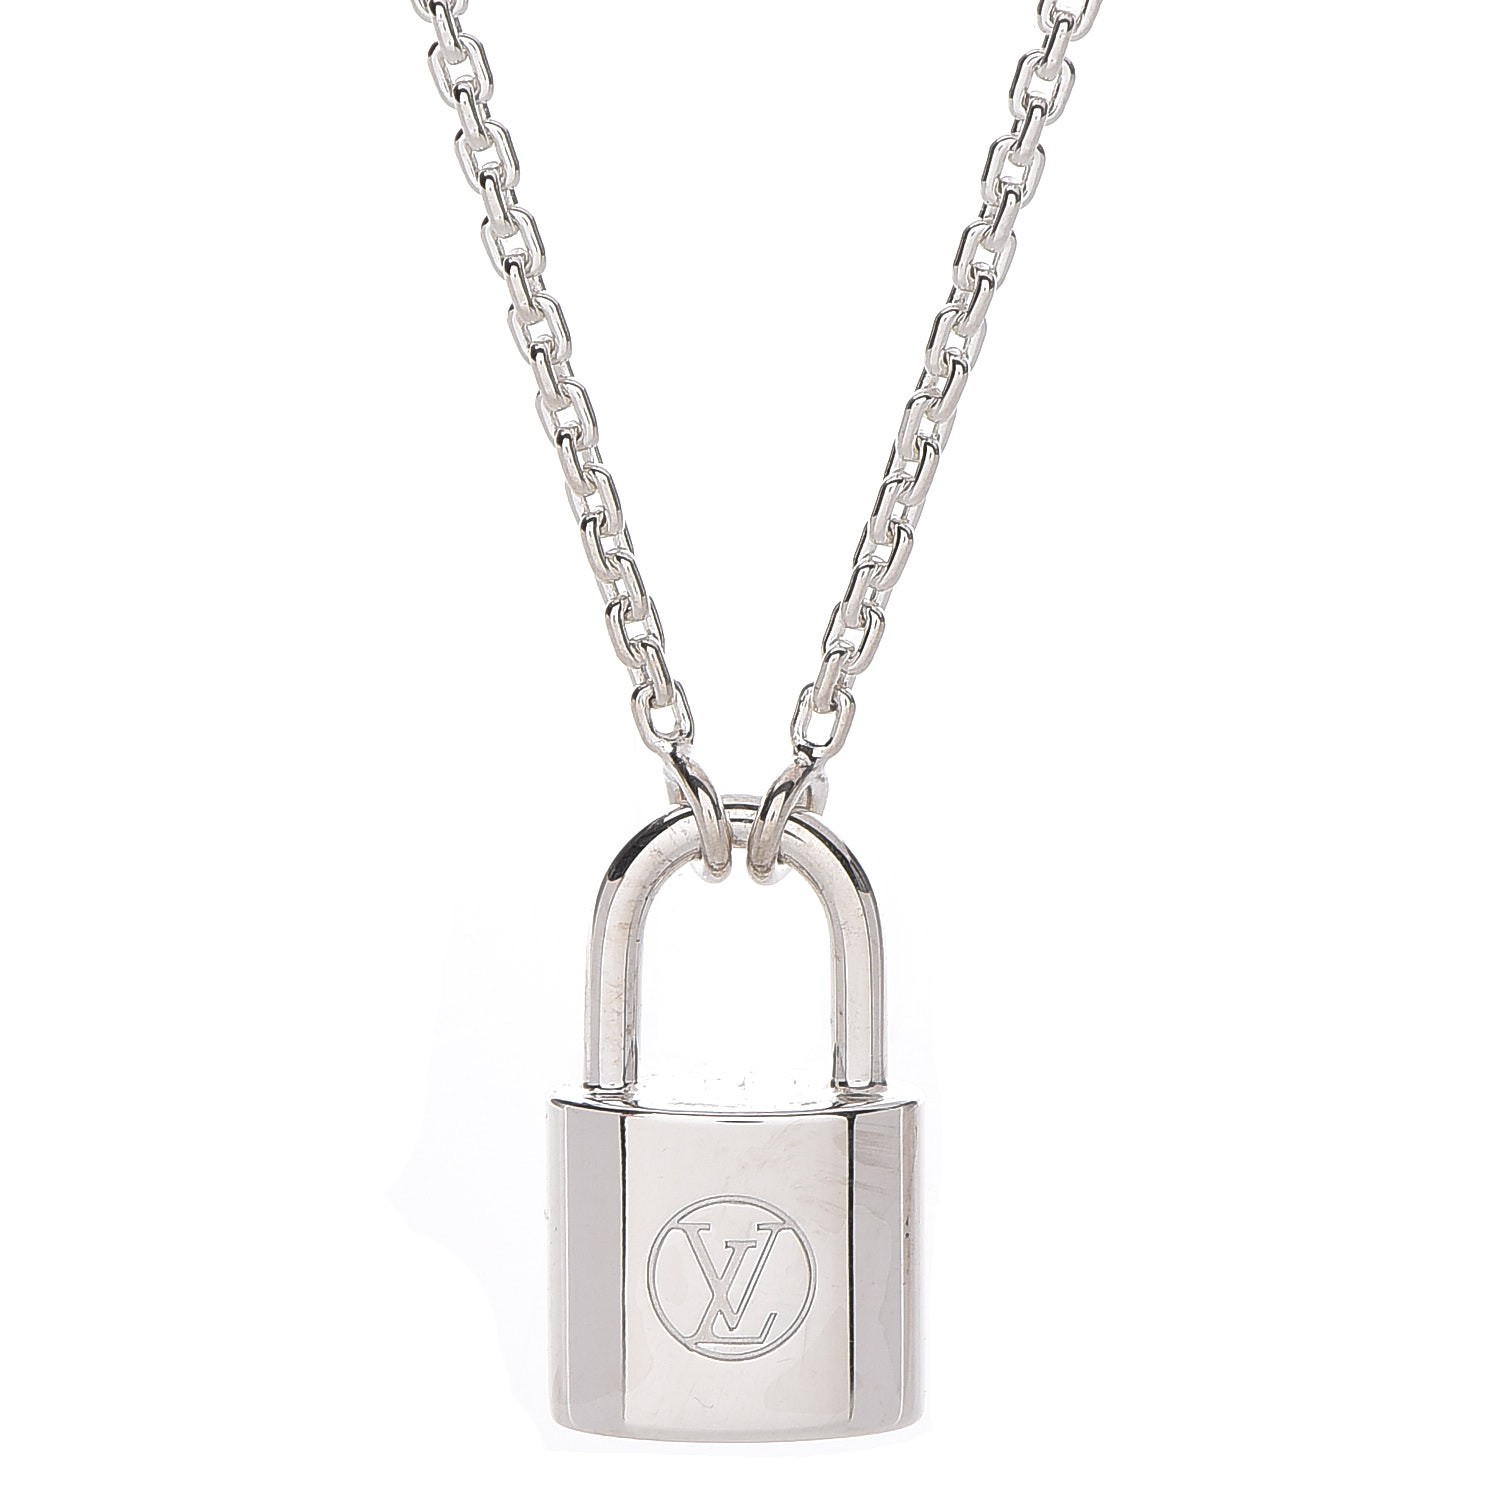 Shop Louis Vuitton Silver lockit pendant, sterling silver (Q93559